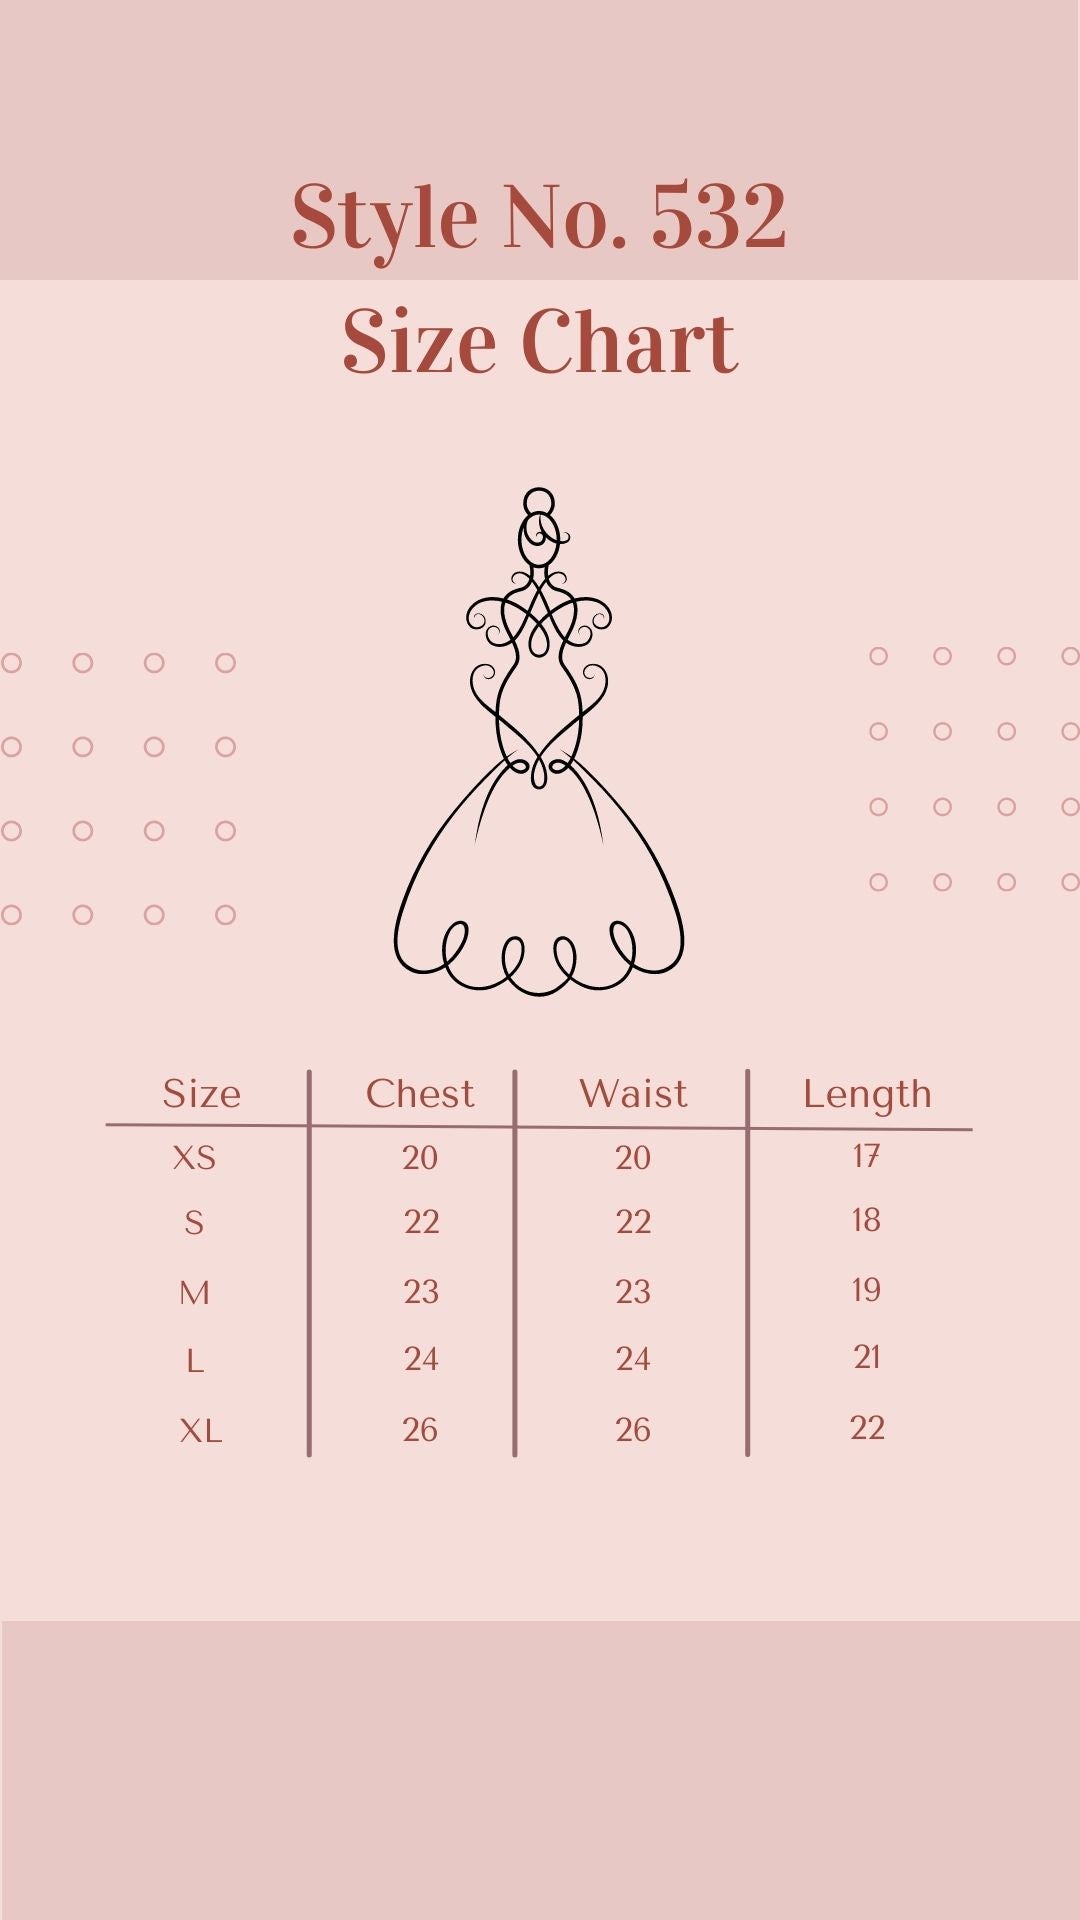 532-B- Lace V Back Bow Baby Dress w/ Mesh Pearl Trim